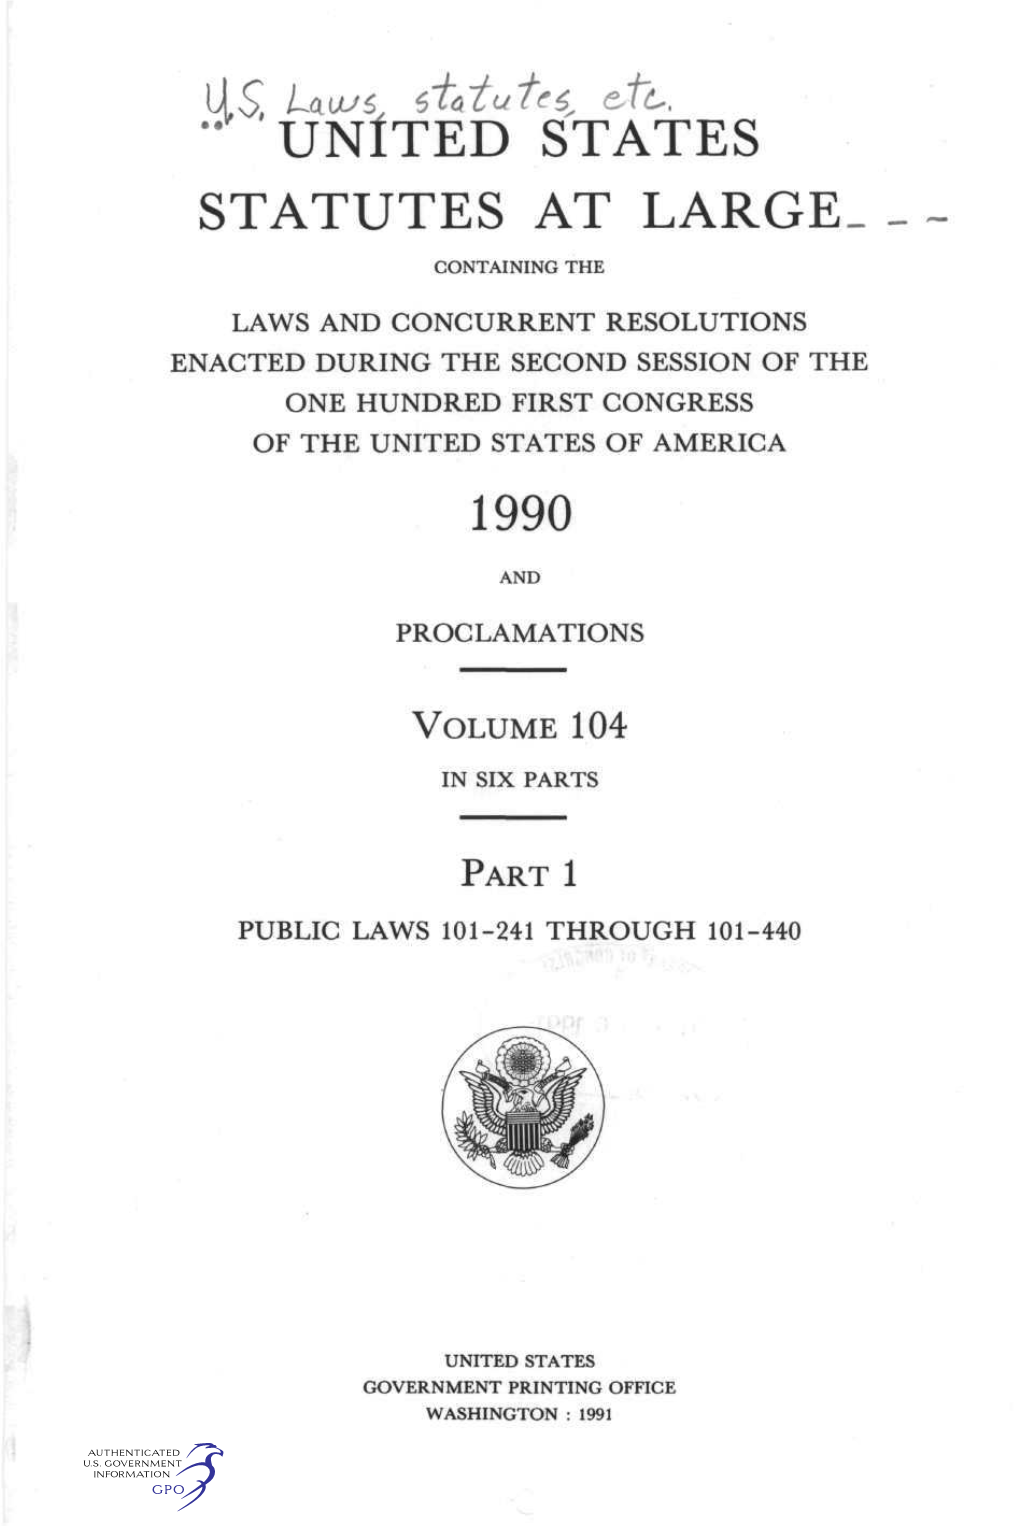 " United States Statutes at Large 1990